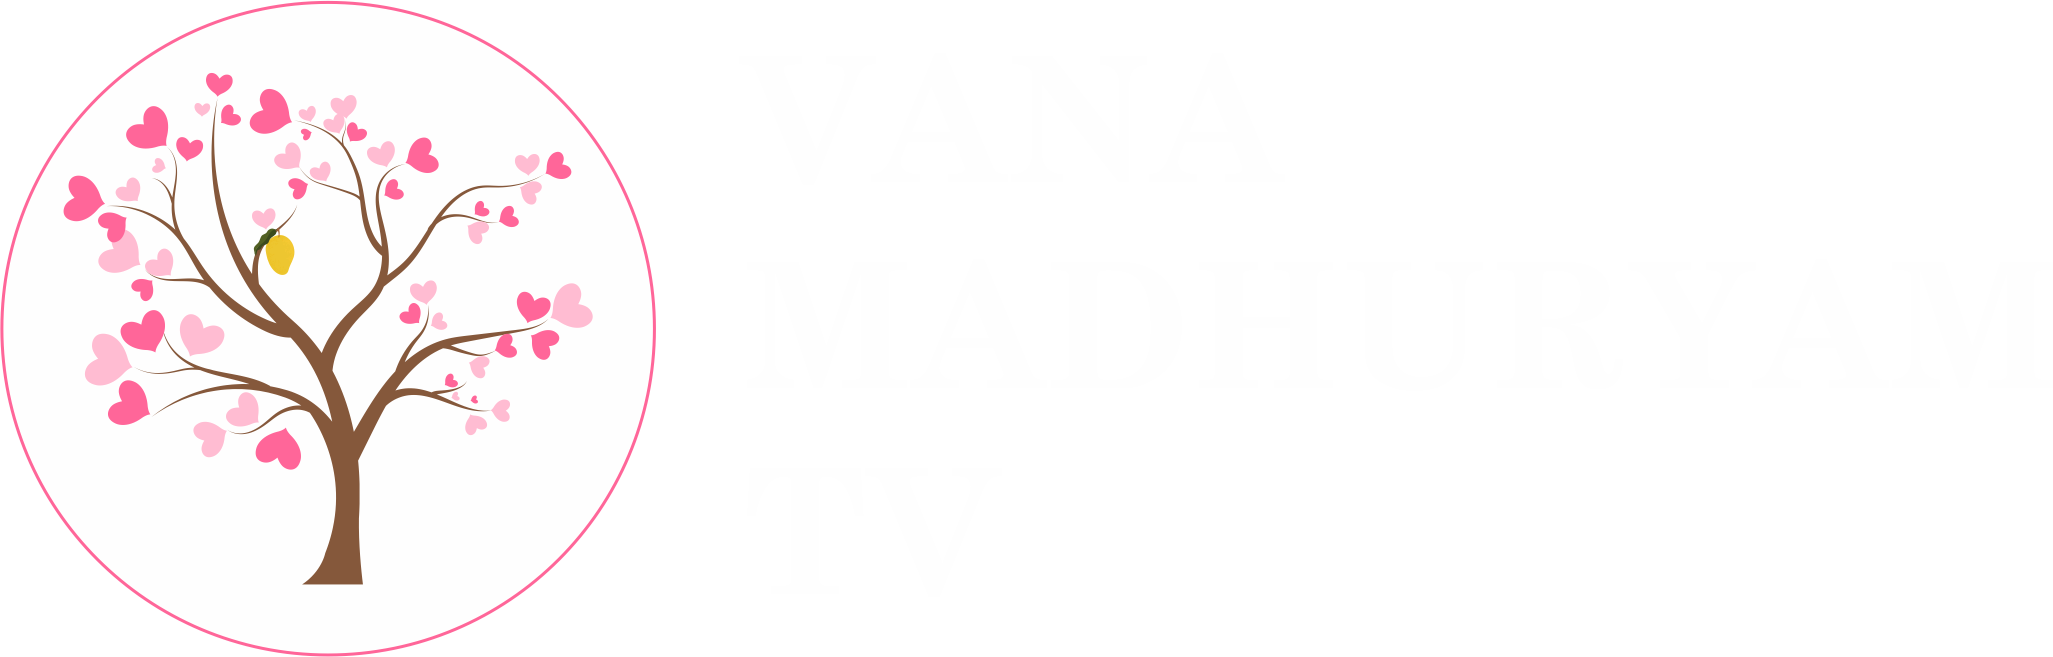 Vana Madhuryam TV